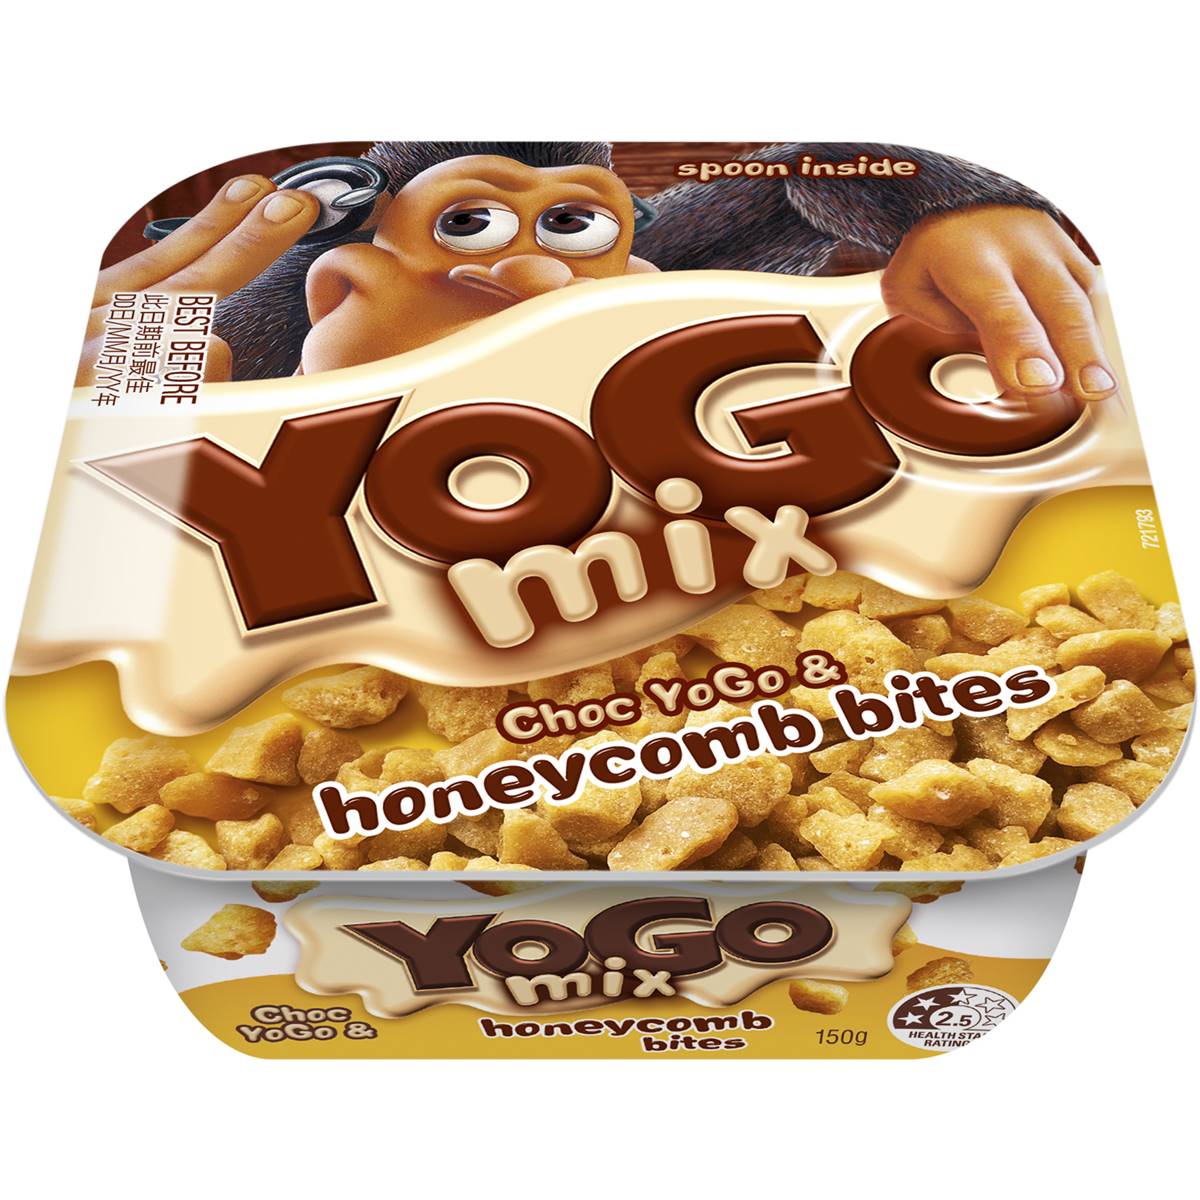 Calories in Yogo Choc Yogo & Honeycomb Bites